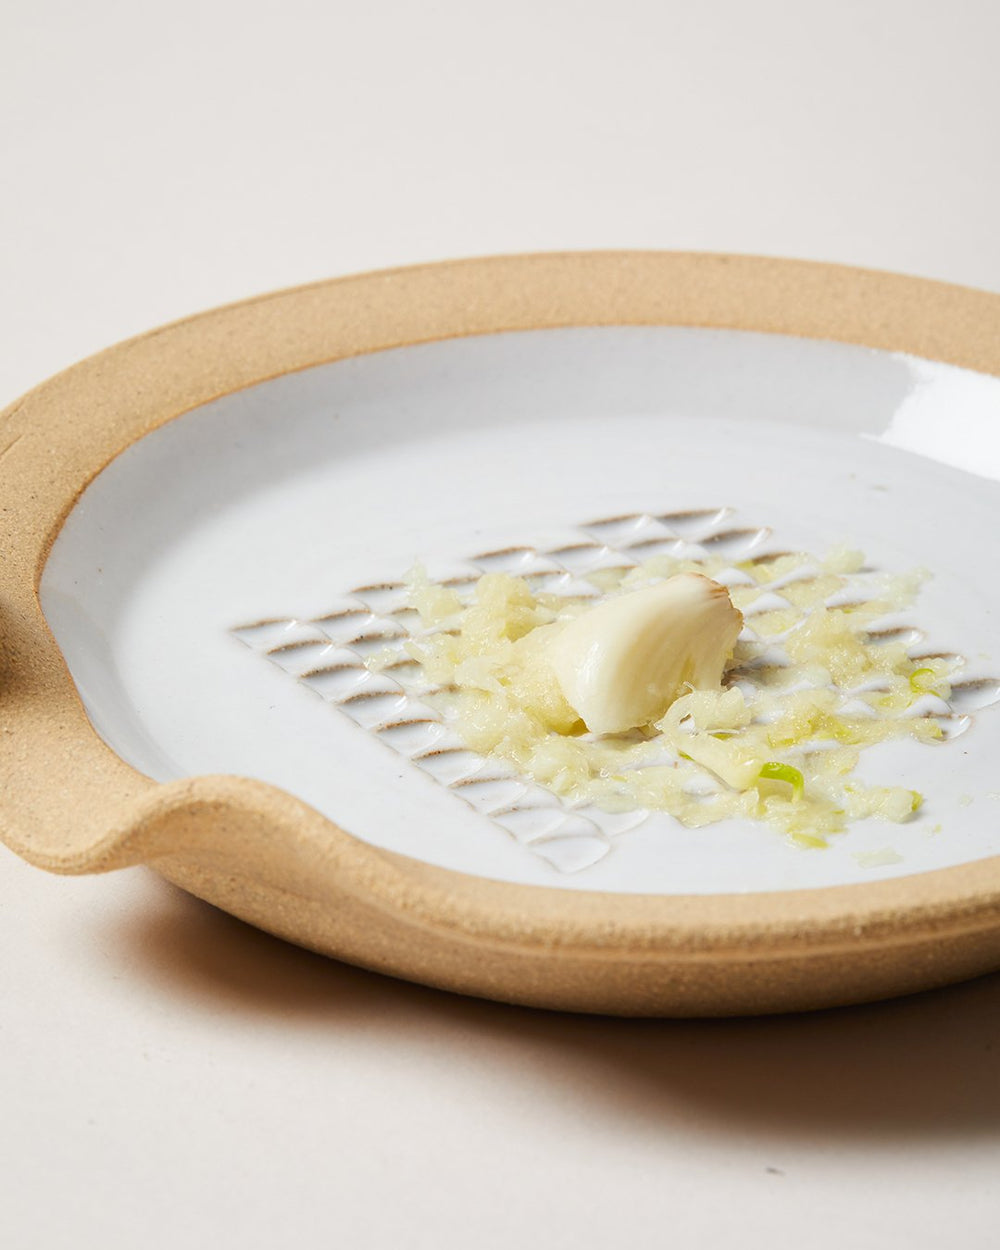 Garlic Grater Plates and Ceramic Kitchenware